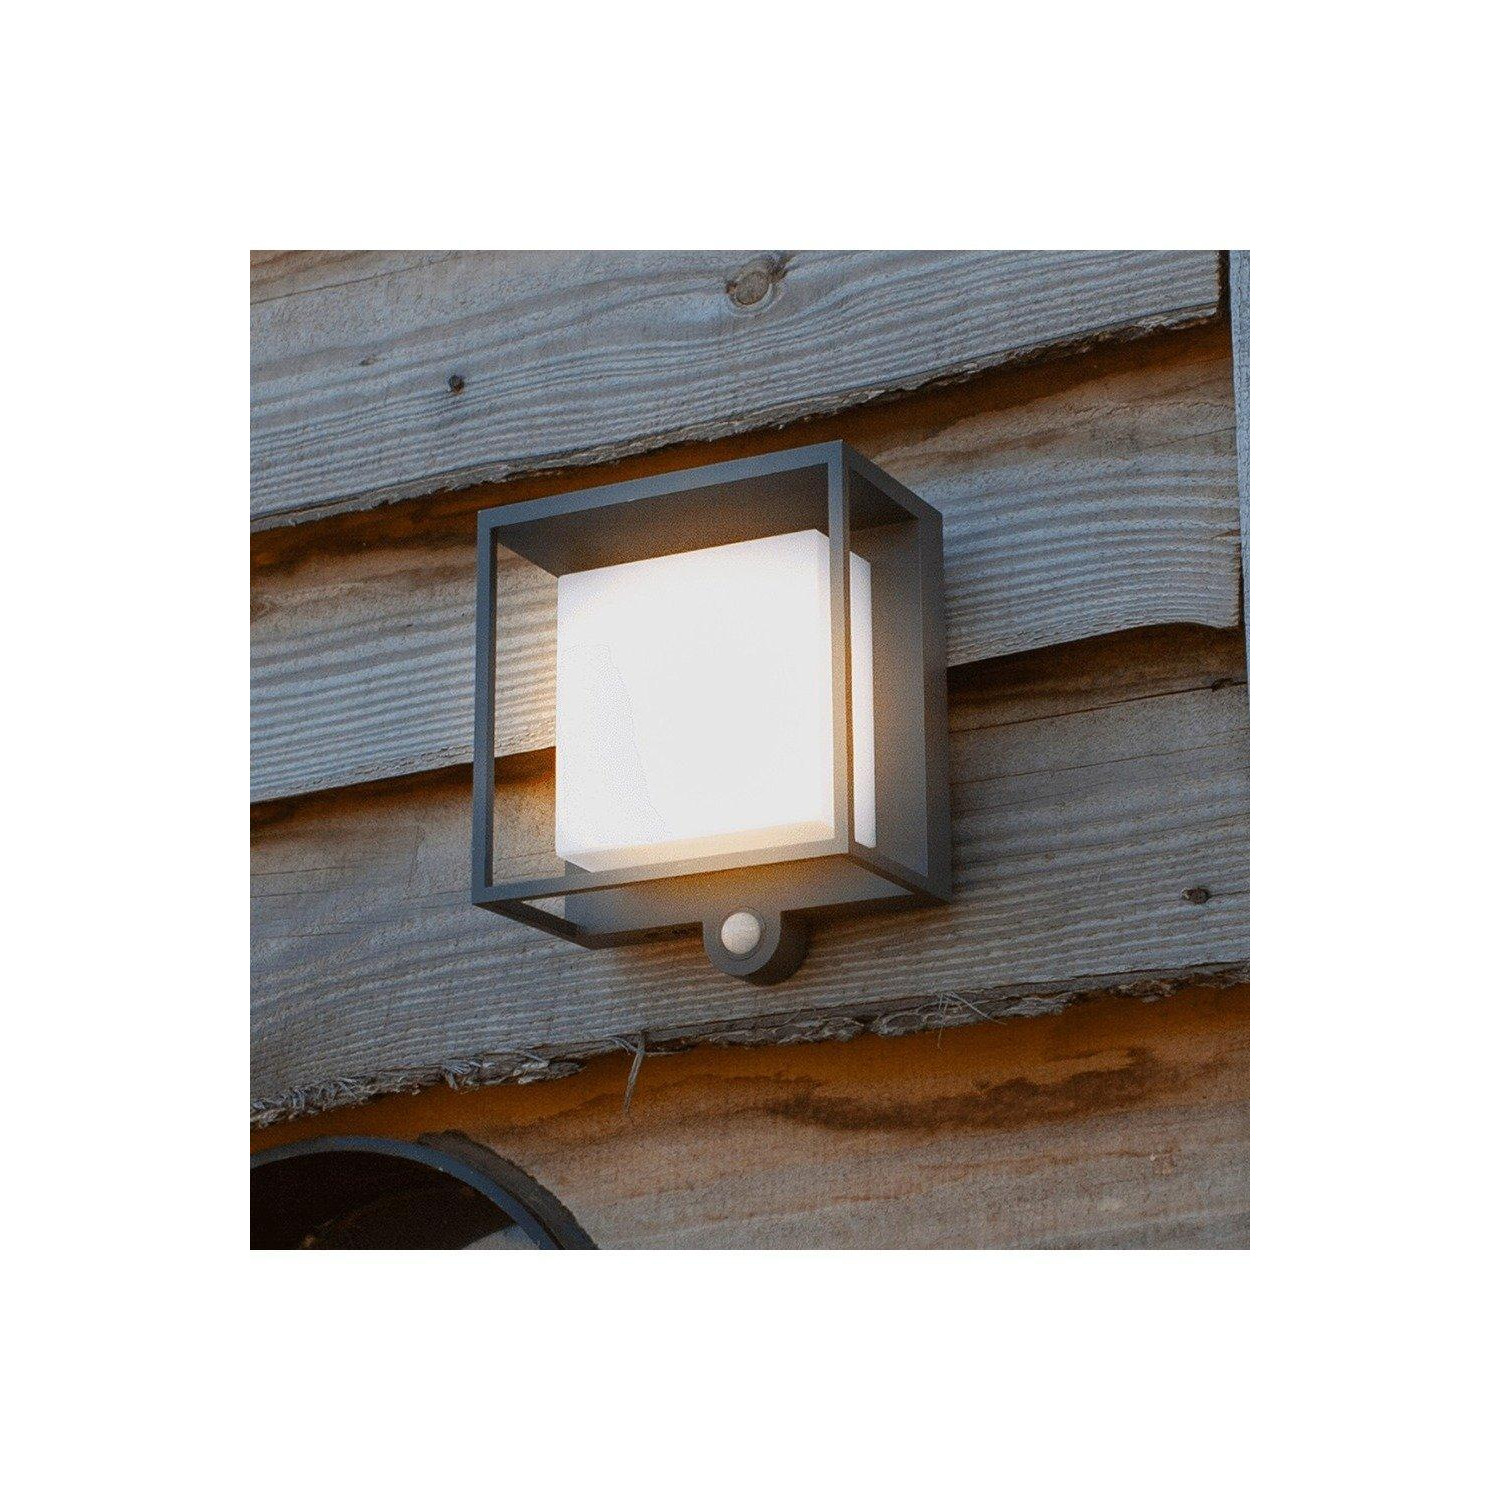 'Wren' Dark Grey Square Solar LED Wall Light With Motion Sensor - image 1